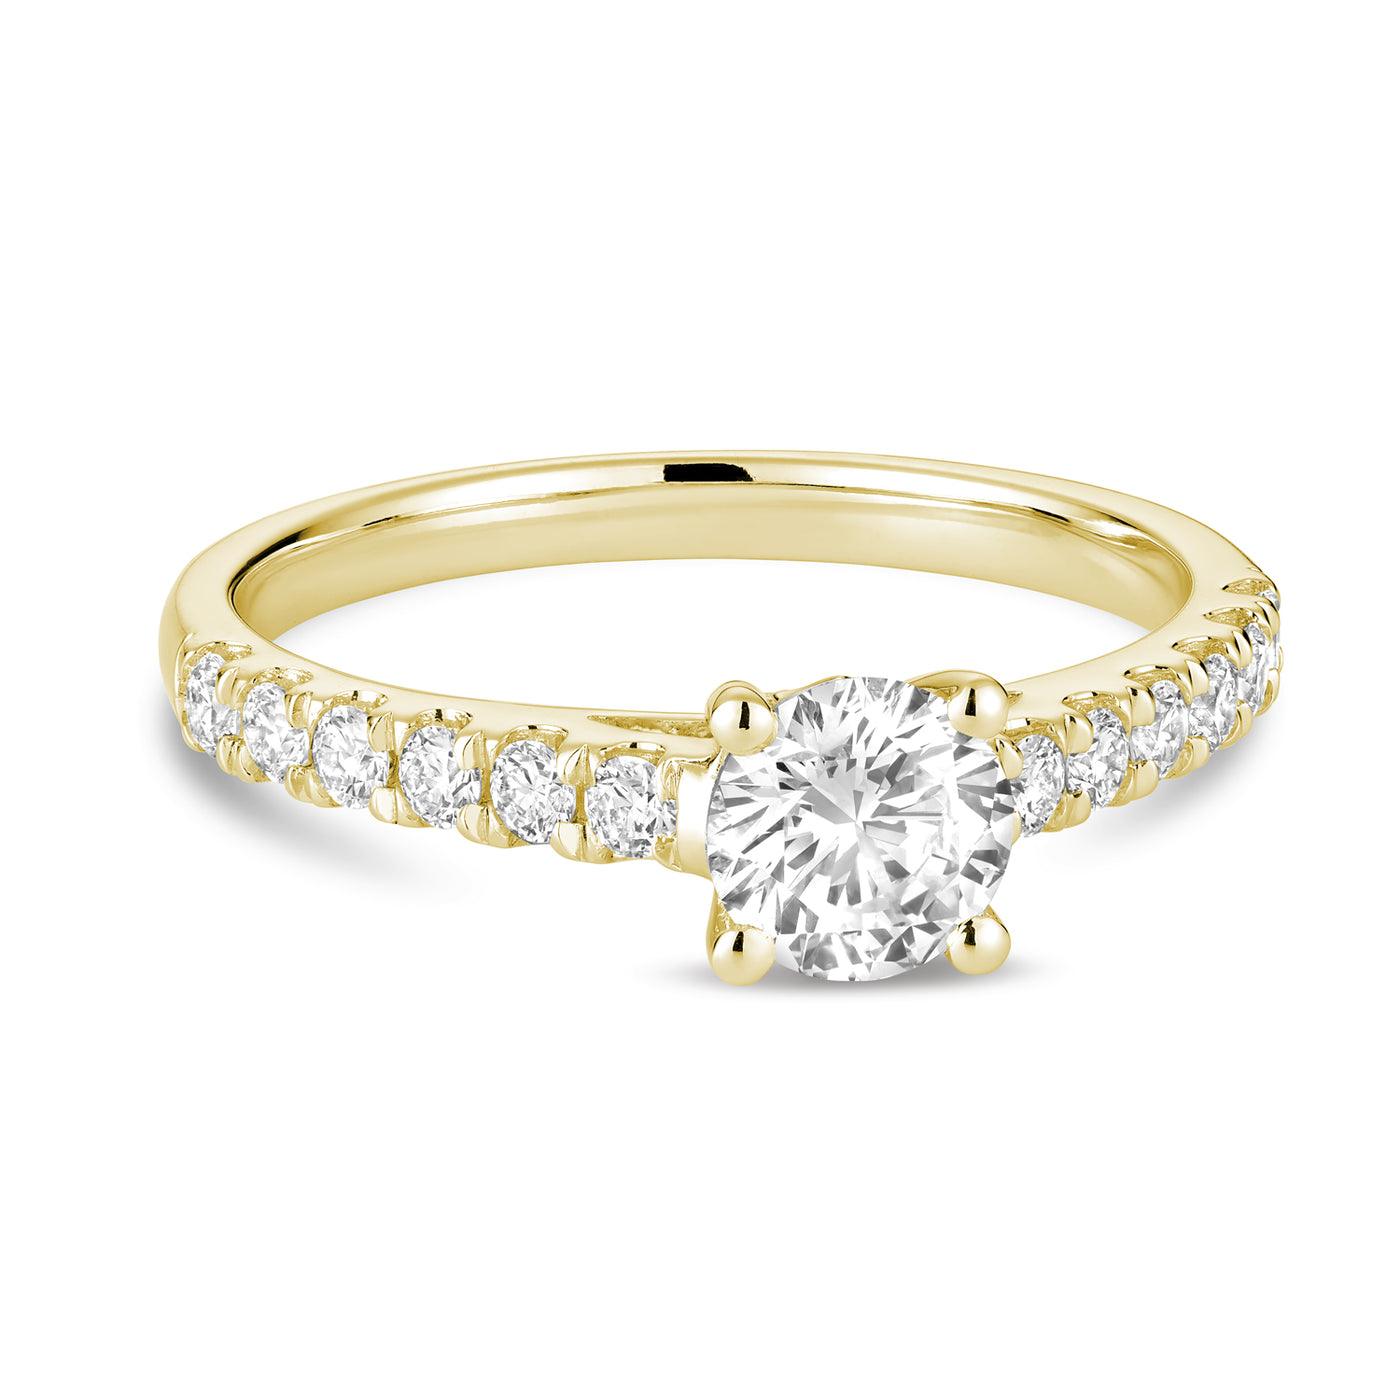 Solitaire Round Diamond Engagement Ring